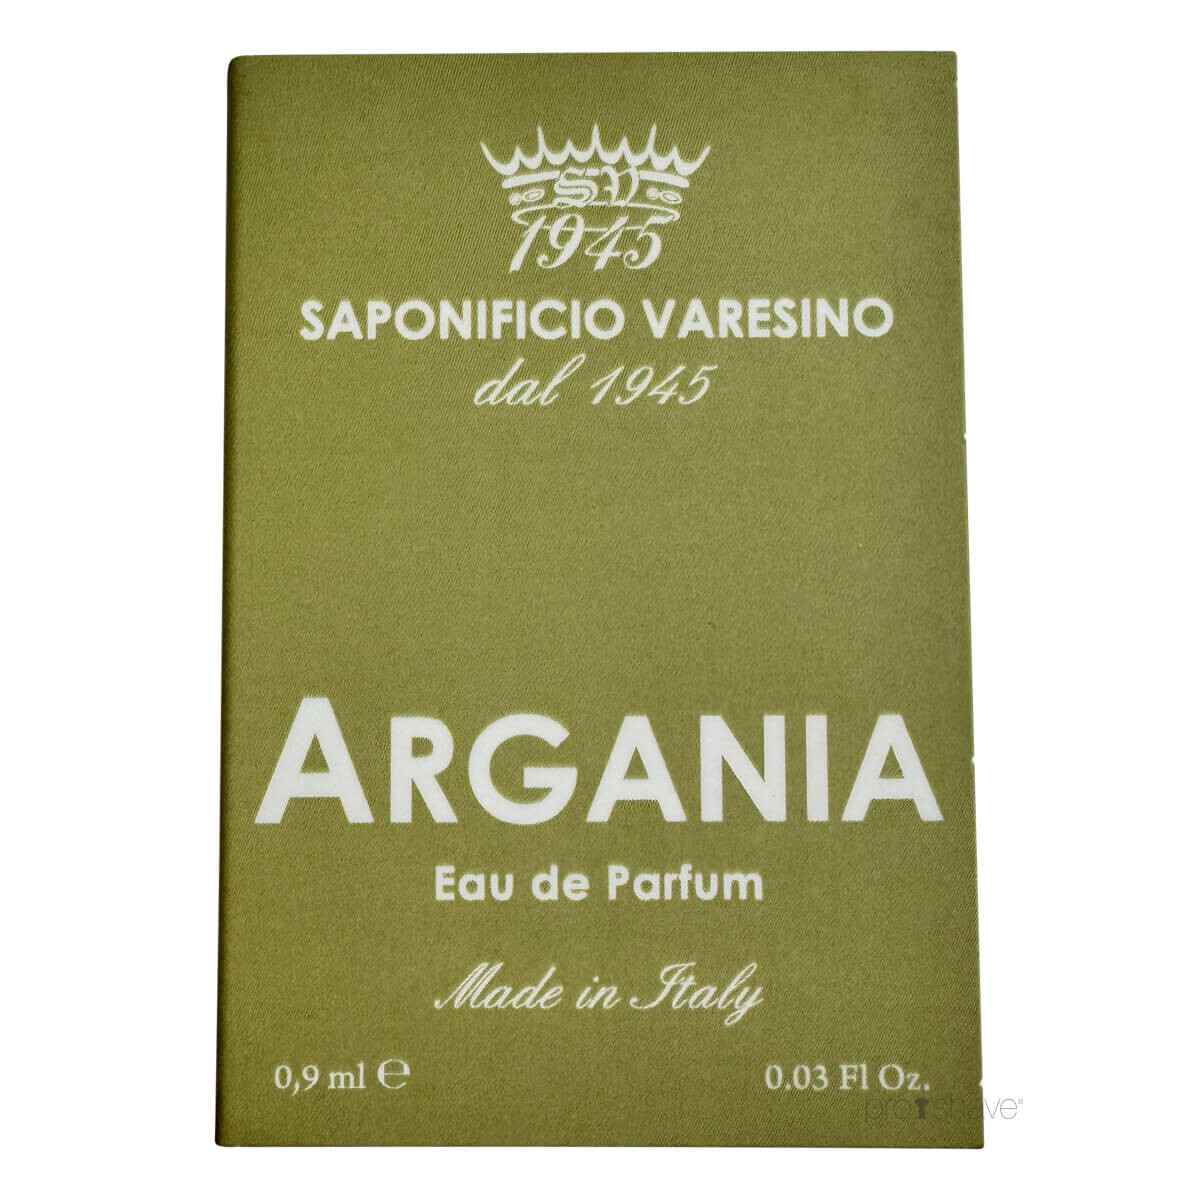 Billede af Saponificio Varesino Eau de Parfum, Argania, Sample, 0.9 ml.